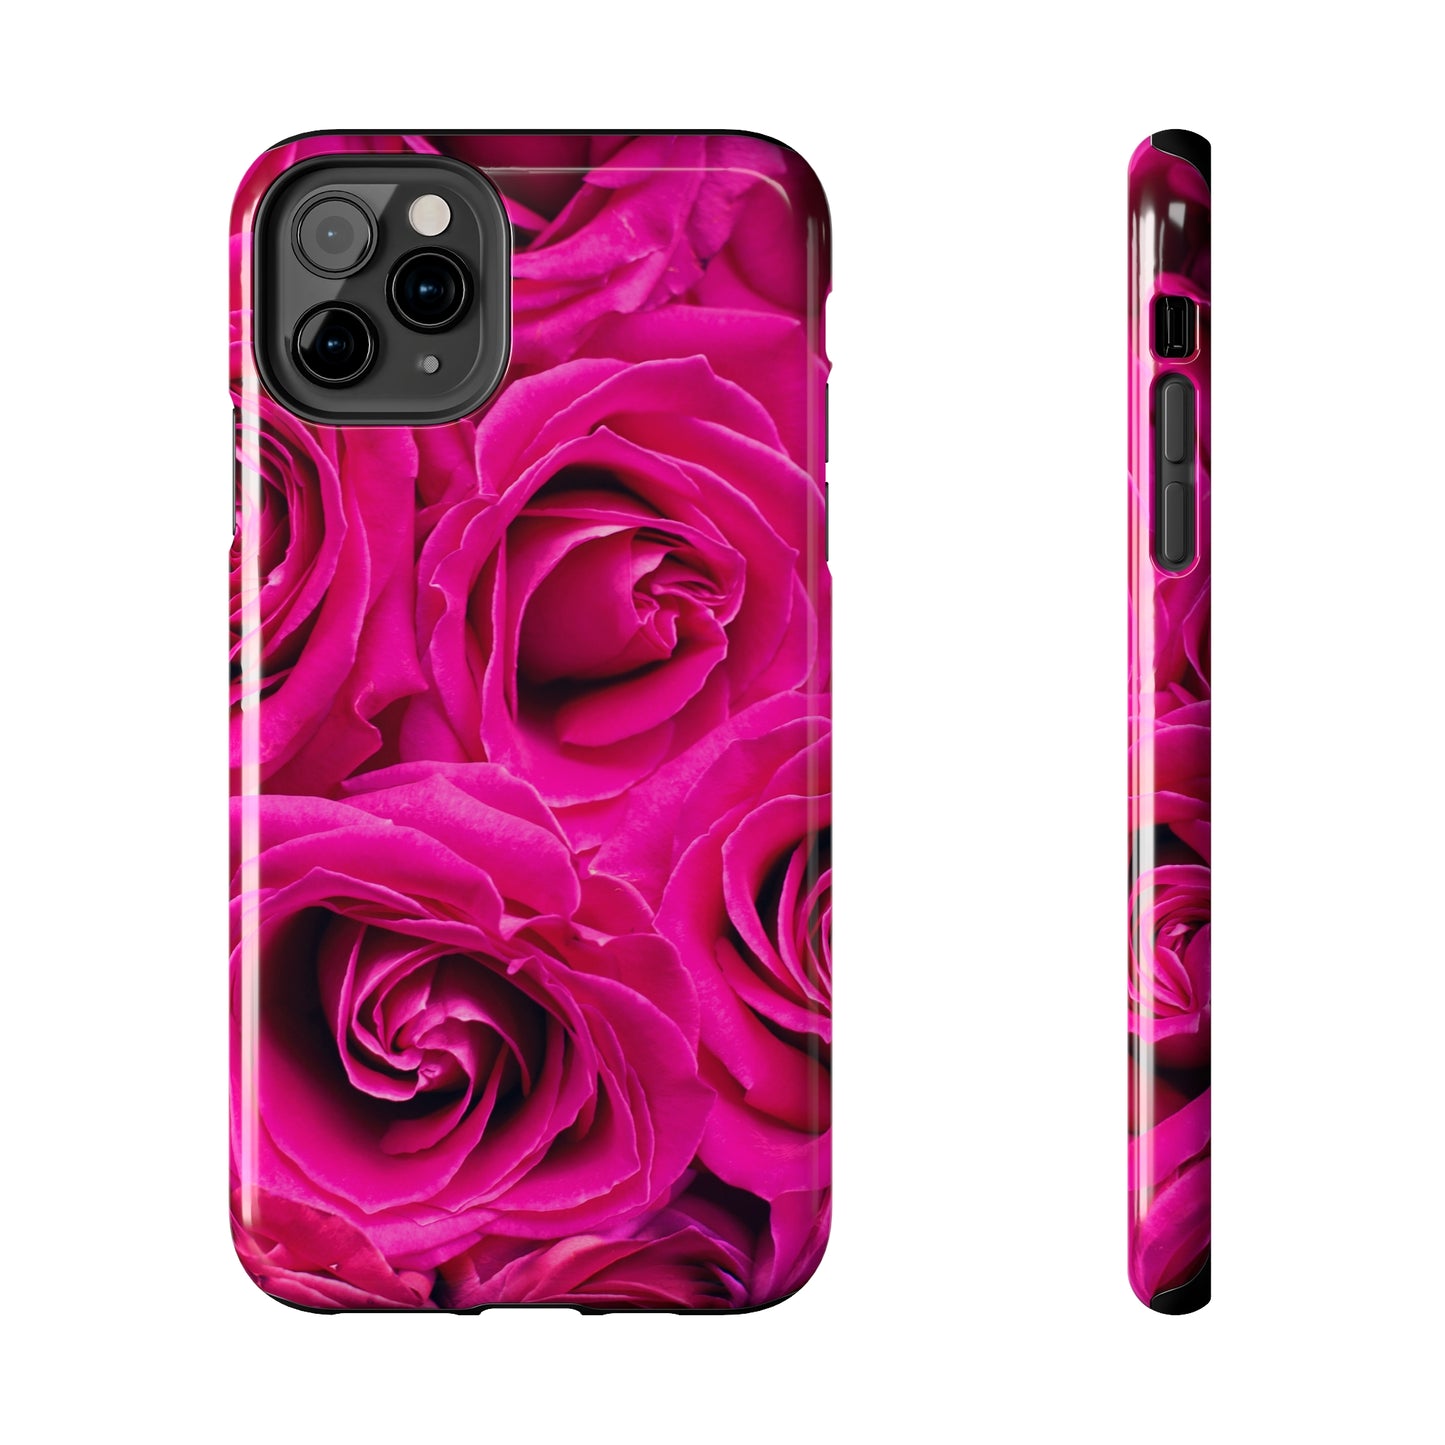 Fuchsia Rose Phone Case